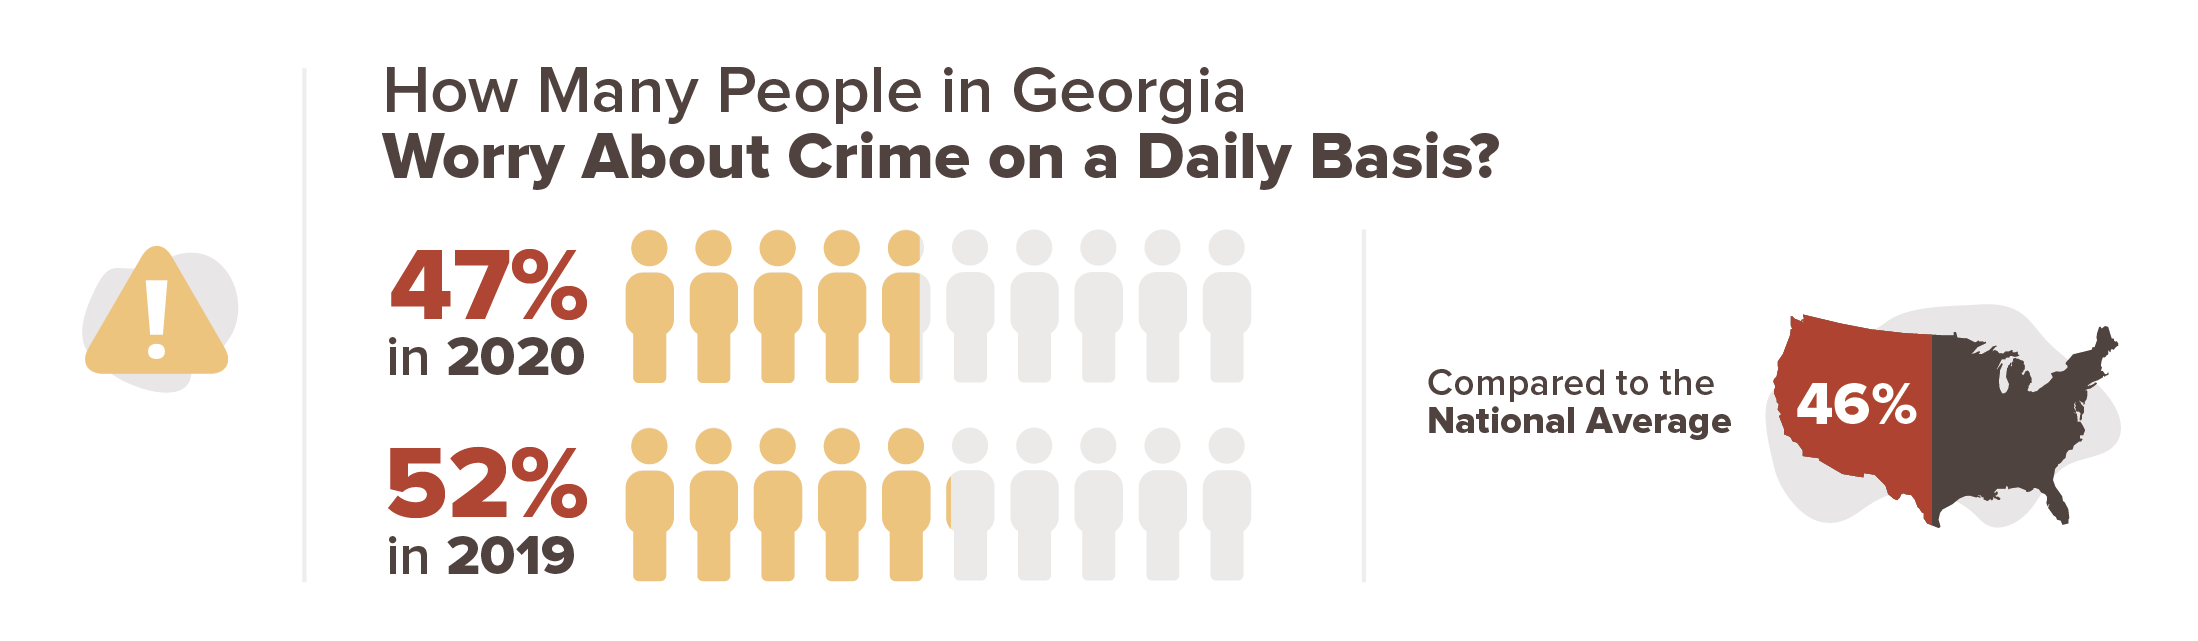 Georgia crime stats infographic